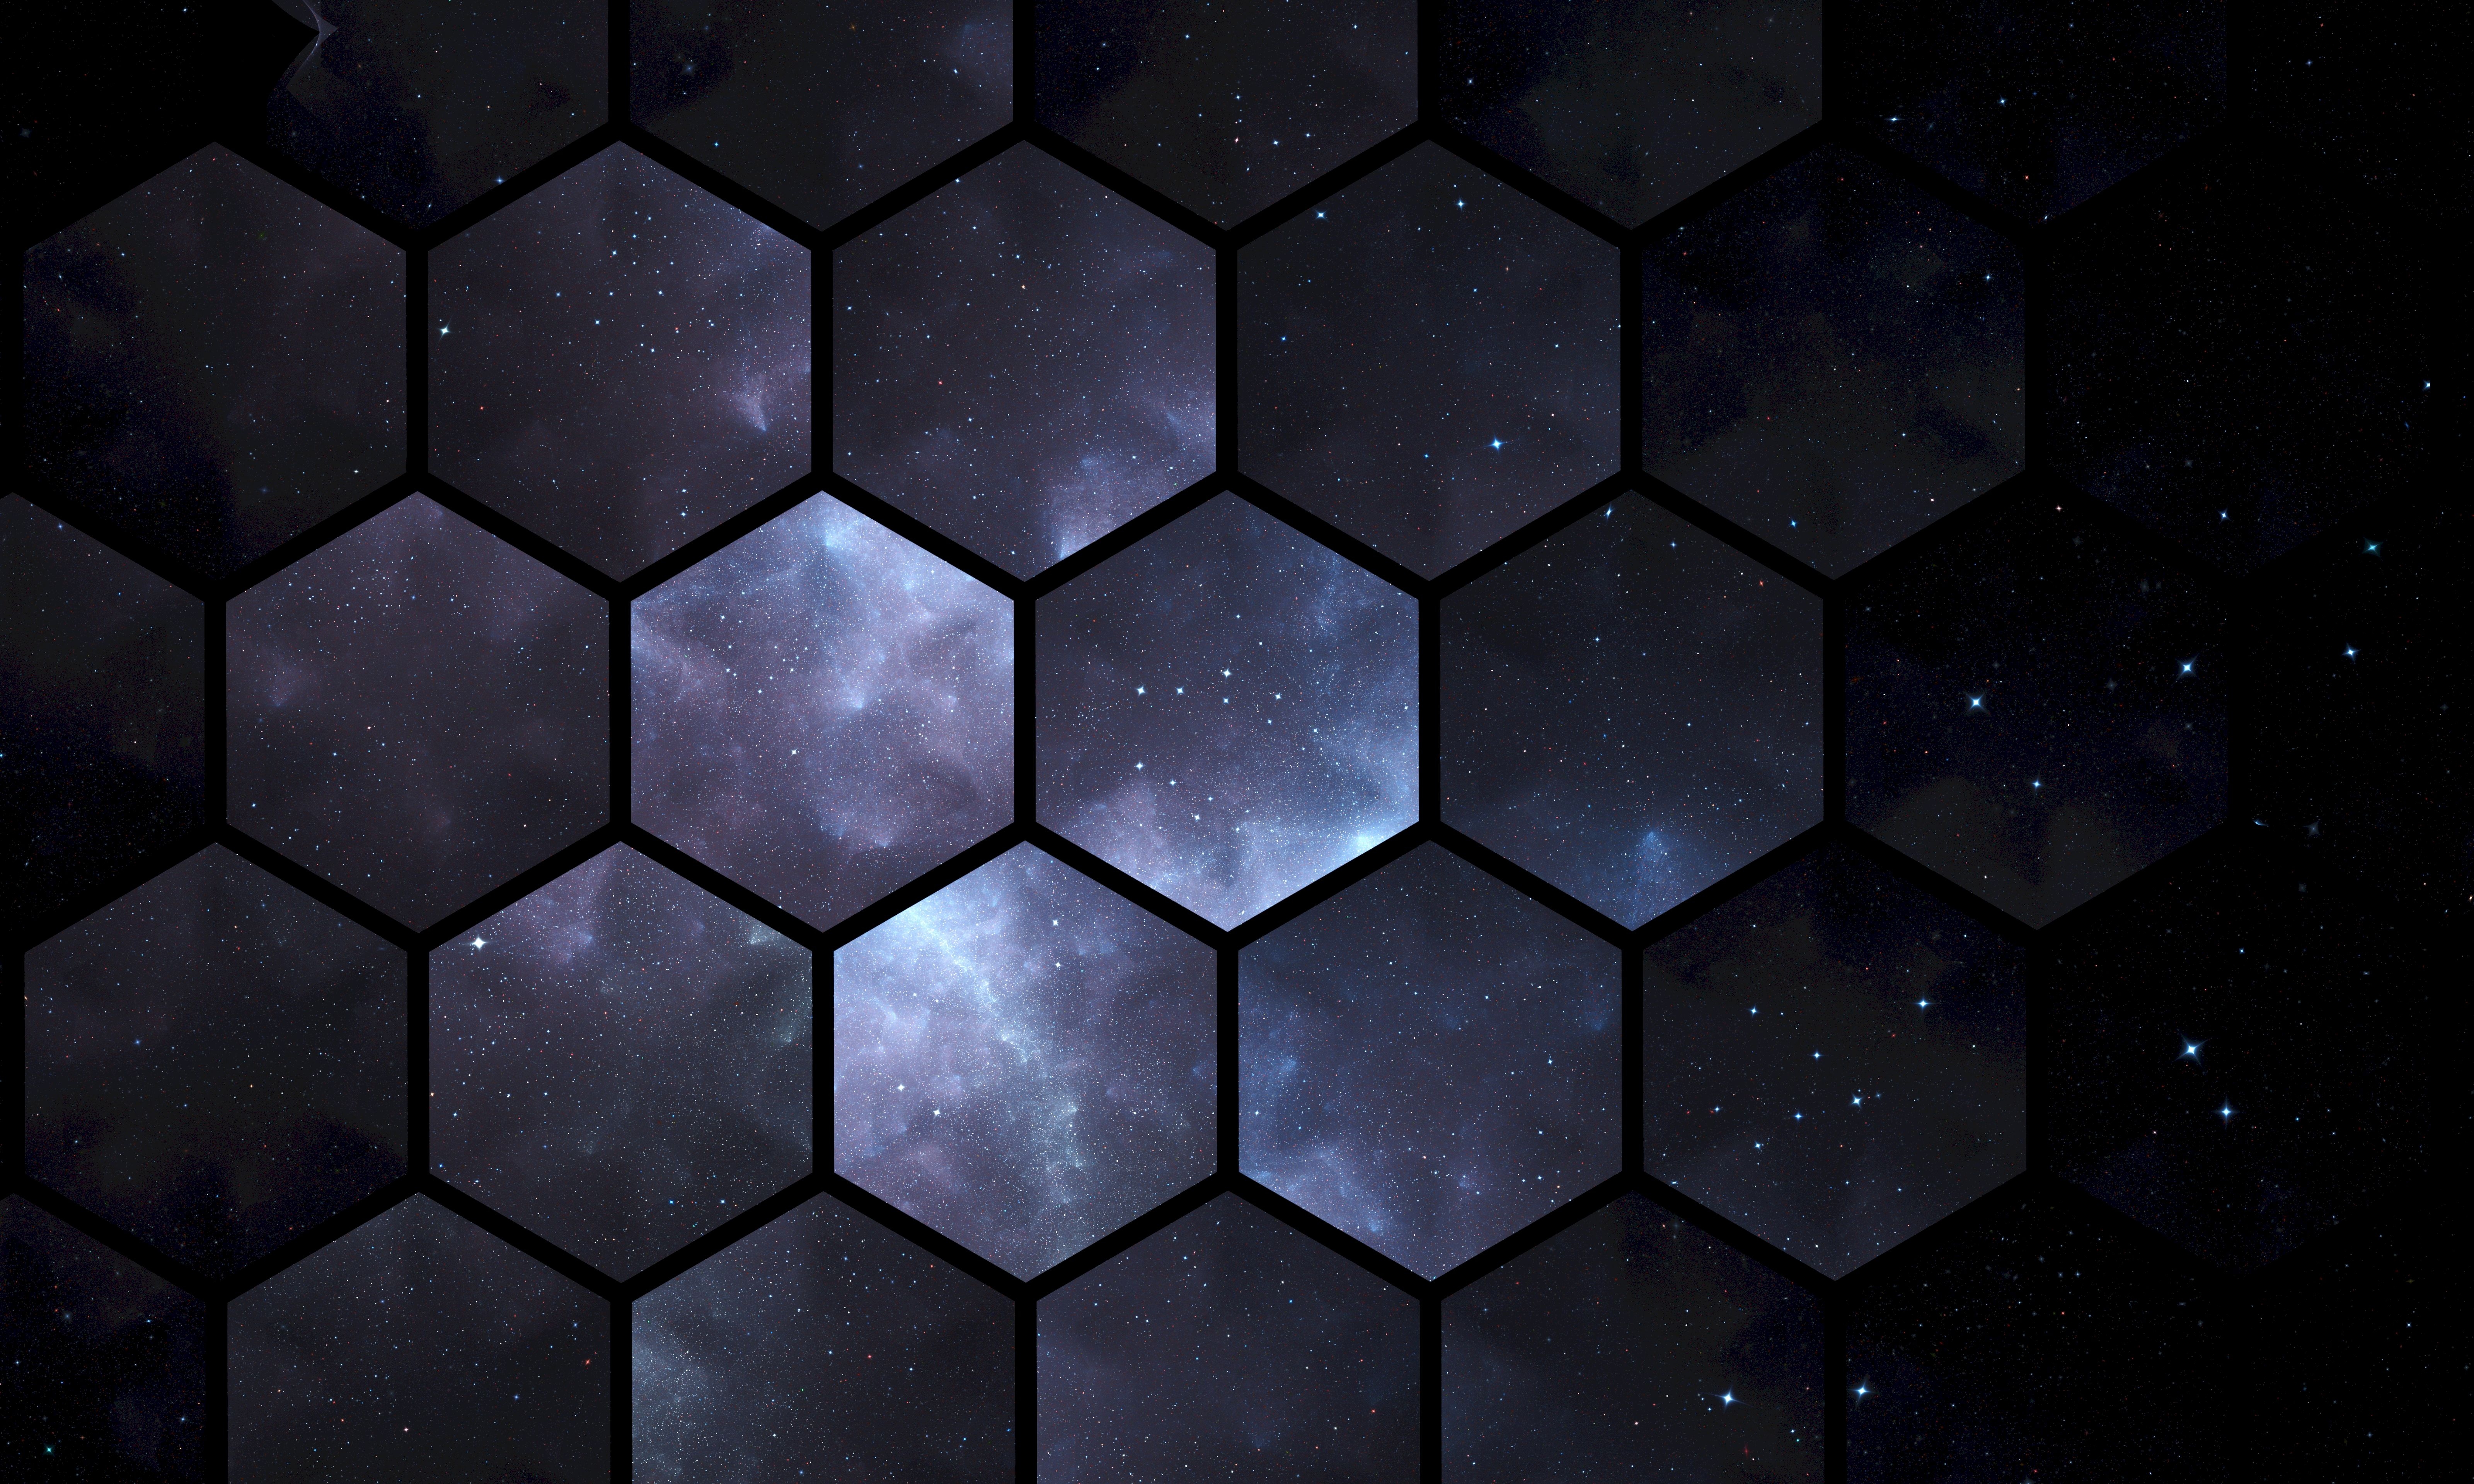 A view of space through a hexagonal pattern